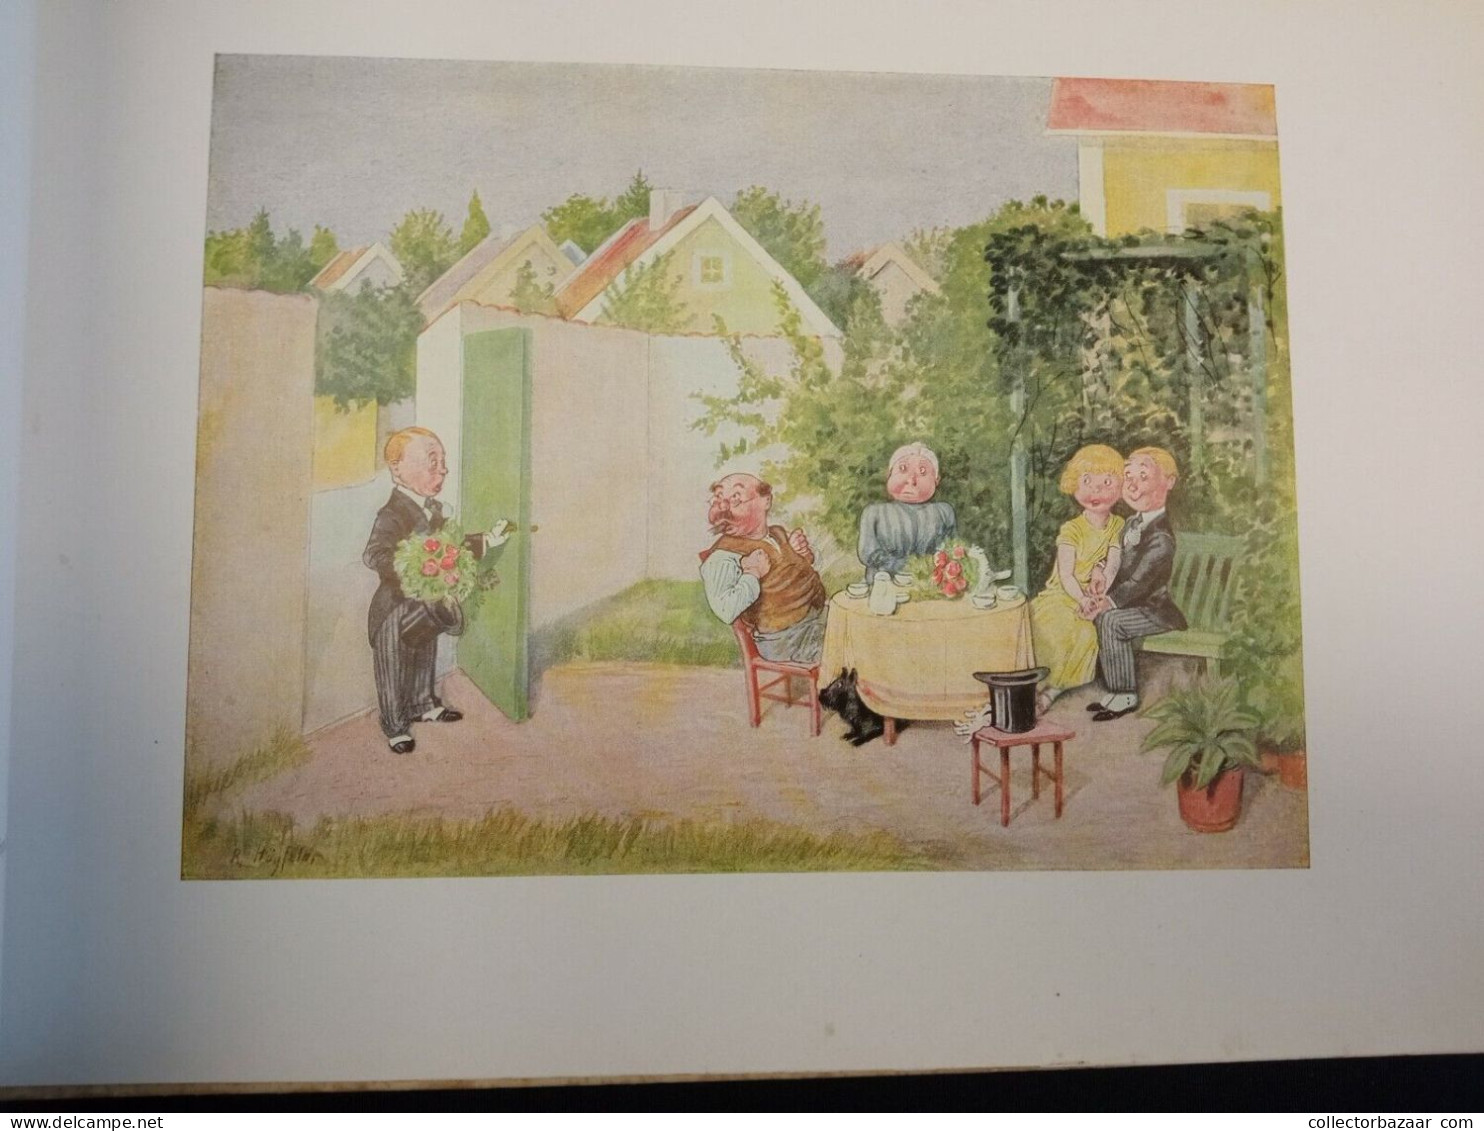 1937 Das Hōgfeldt-buch Cornell Germany children book w/36 color plates original in great condition !